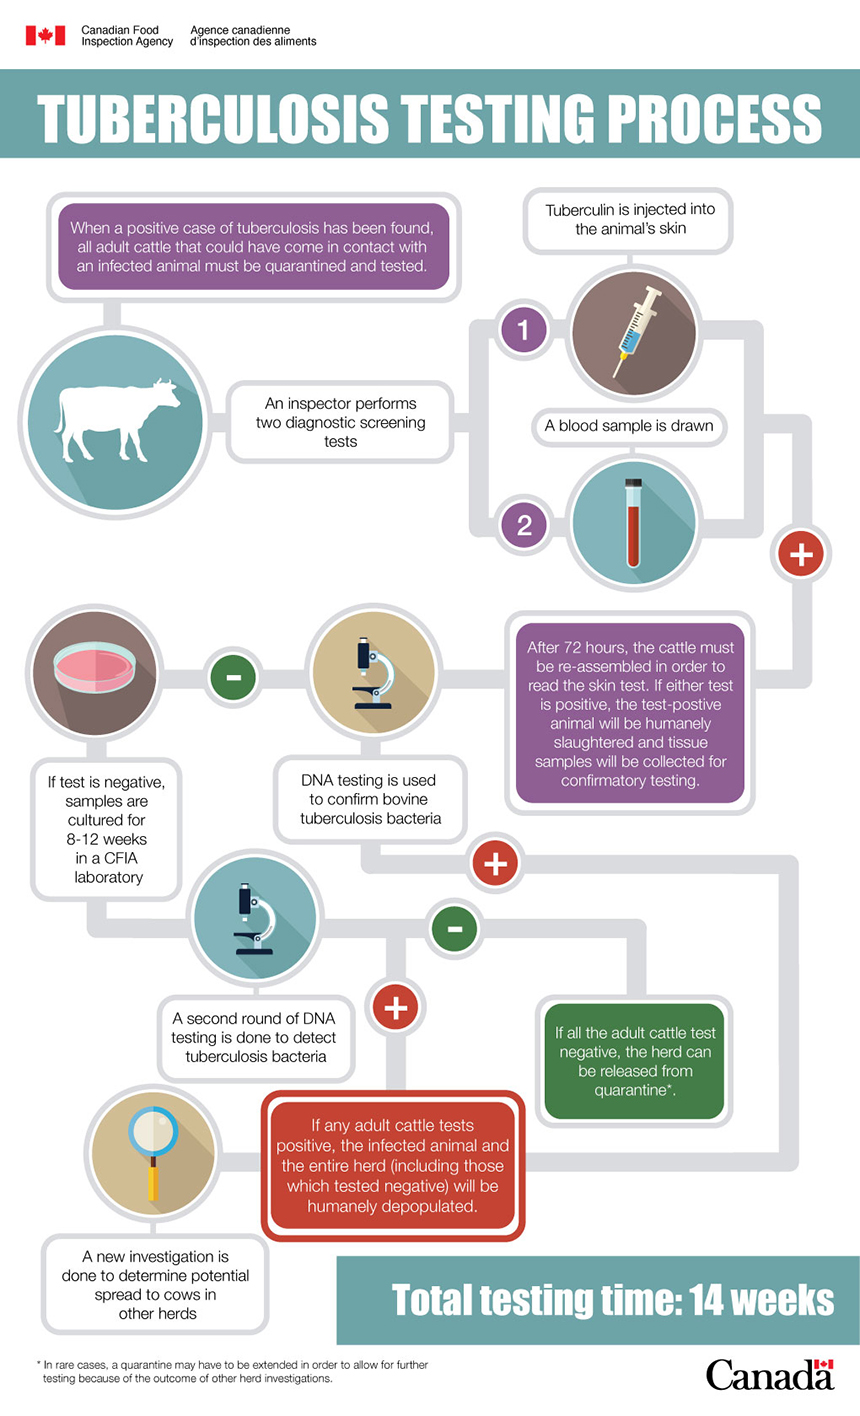 Infographic: Tuberculosis Testing Timeline. Description follows.